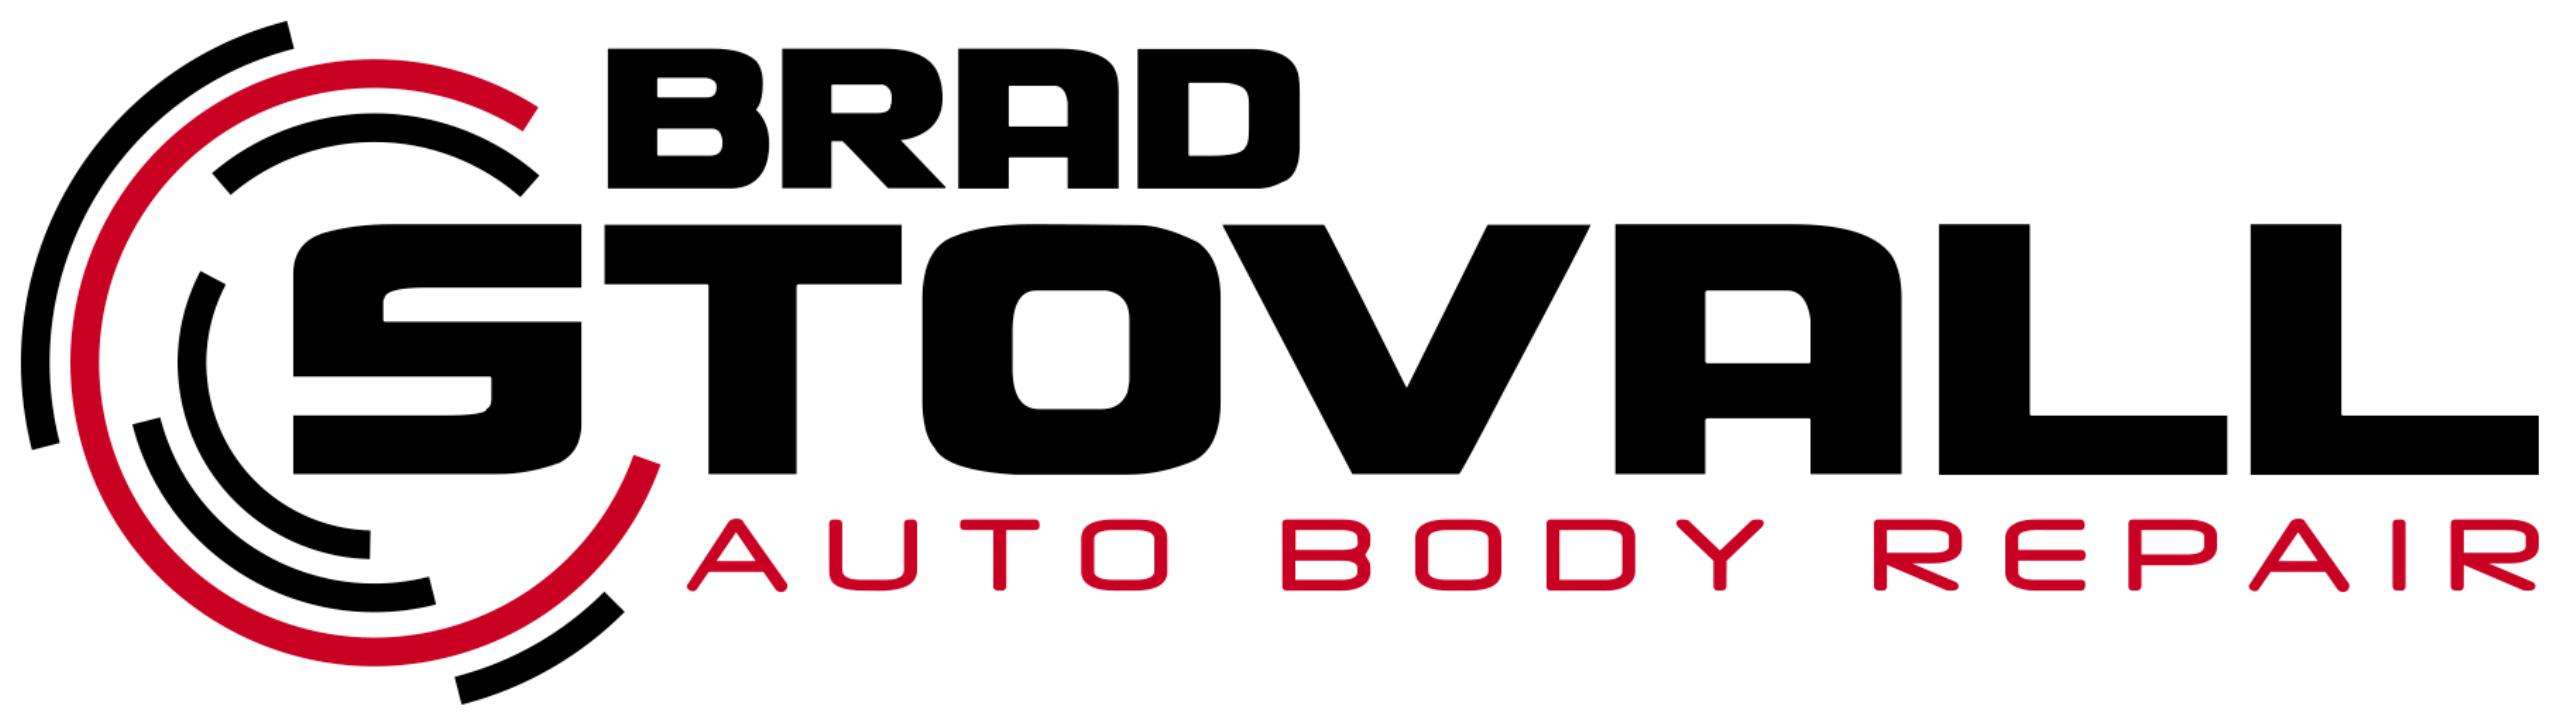 Brad Stovall Auto Body Shop Logo